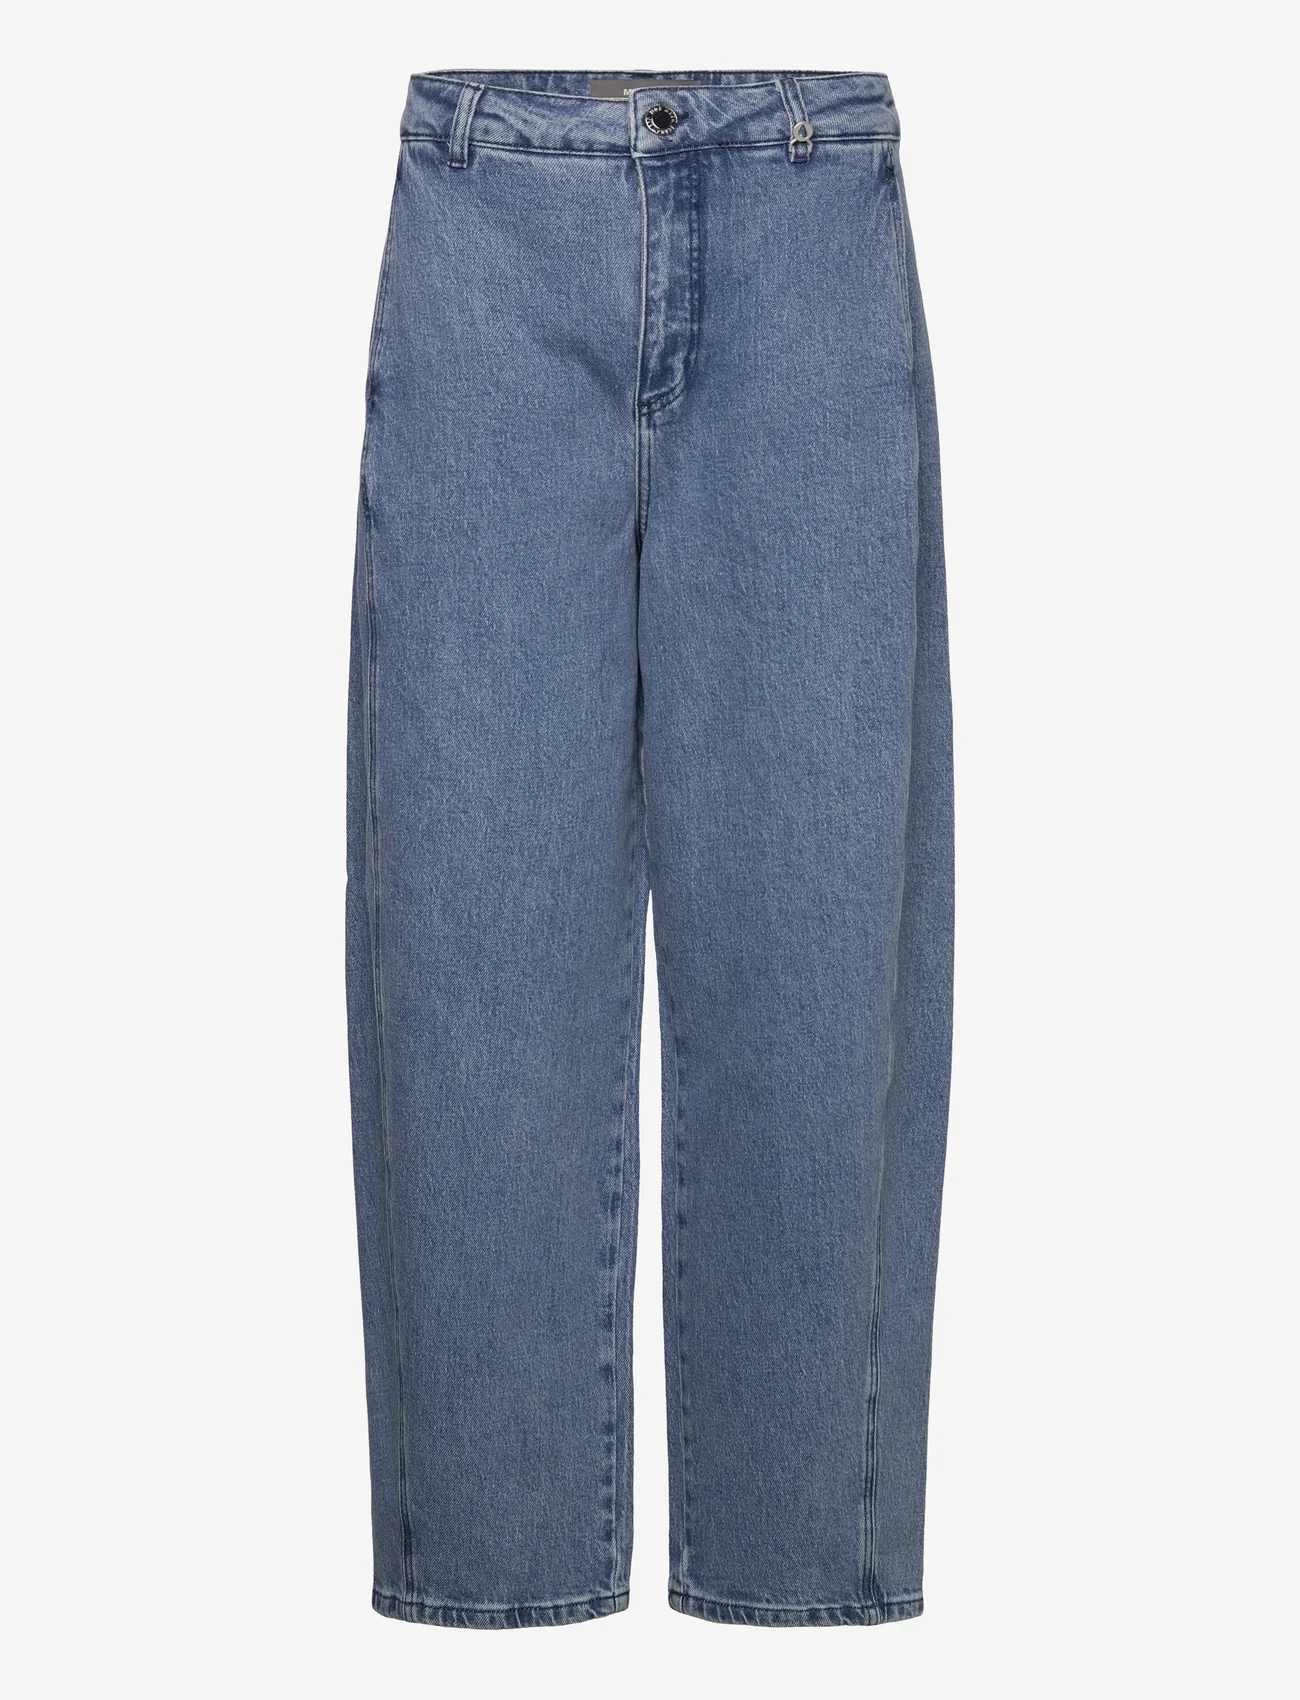 MOS MOSH - MMBarrel Mondra Jeans - jeans met wijde pijpen - blue - 0